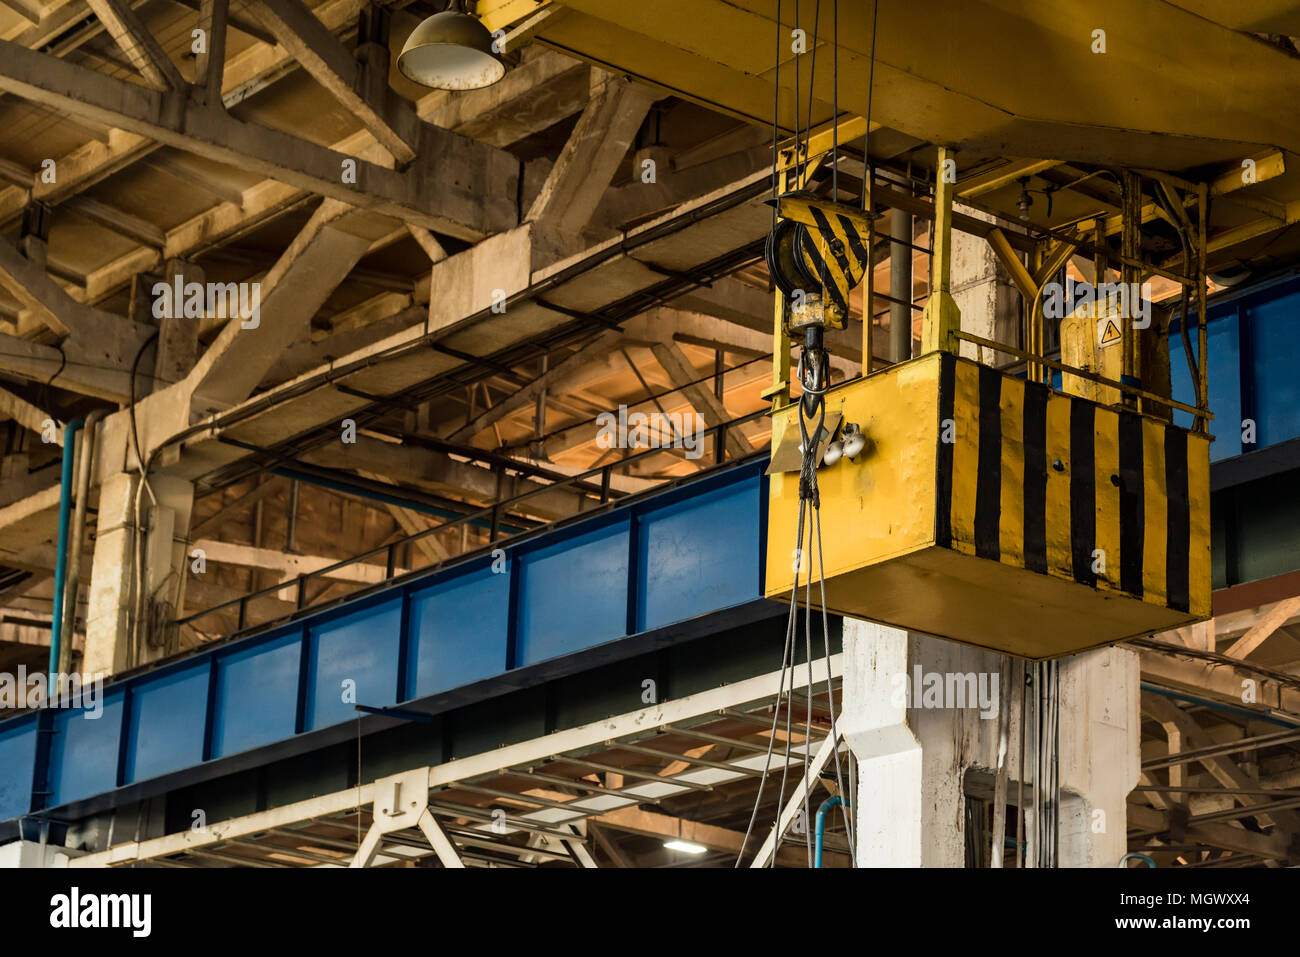 Gantry crane in industrial plant interior Stock Photo